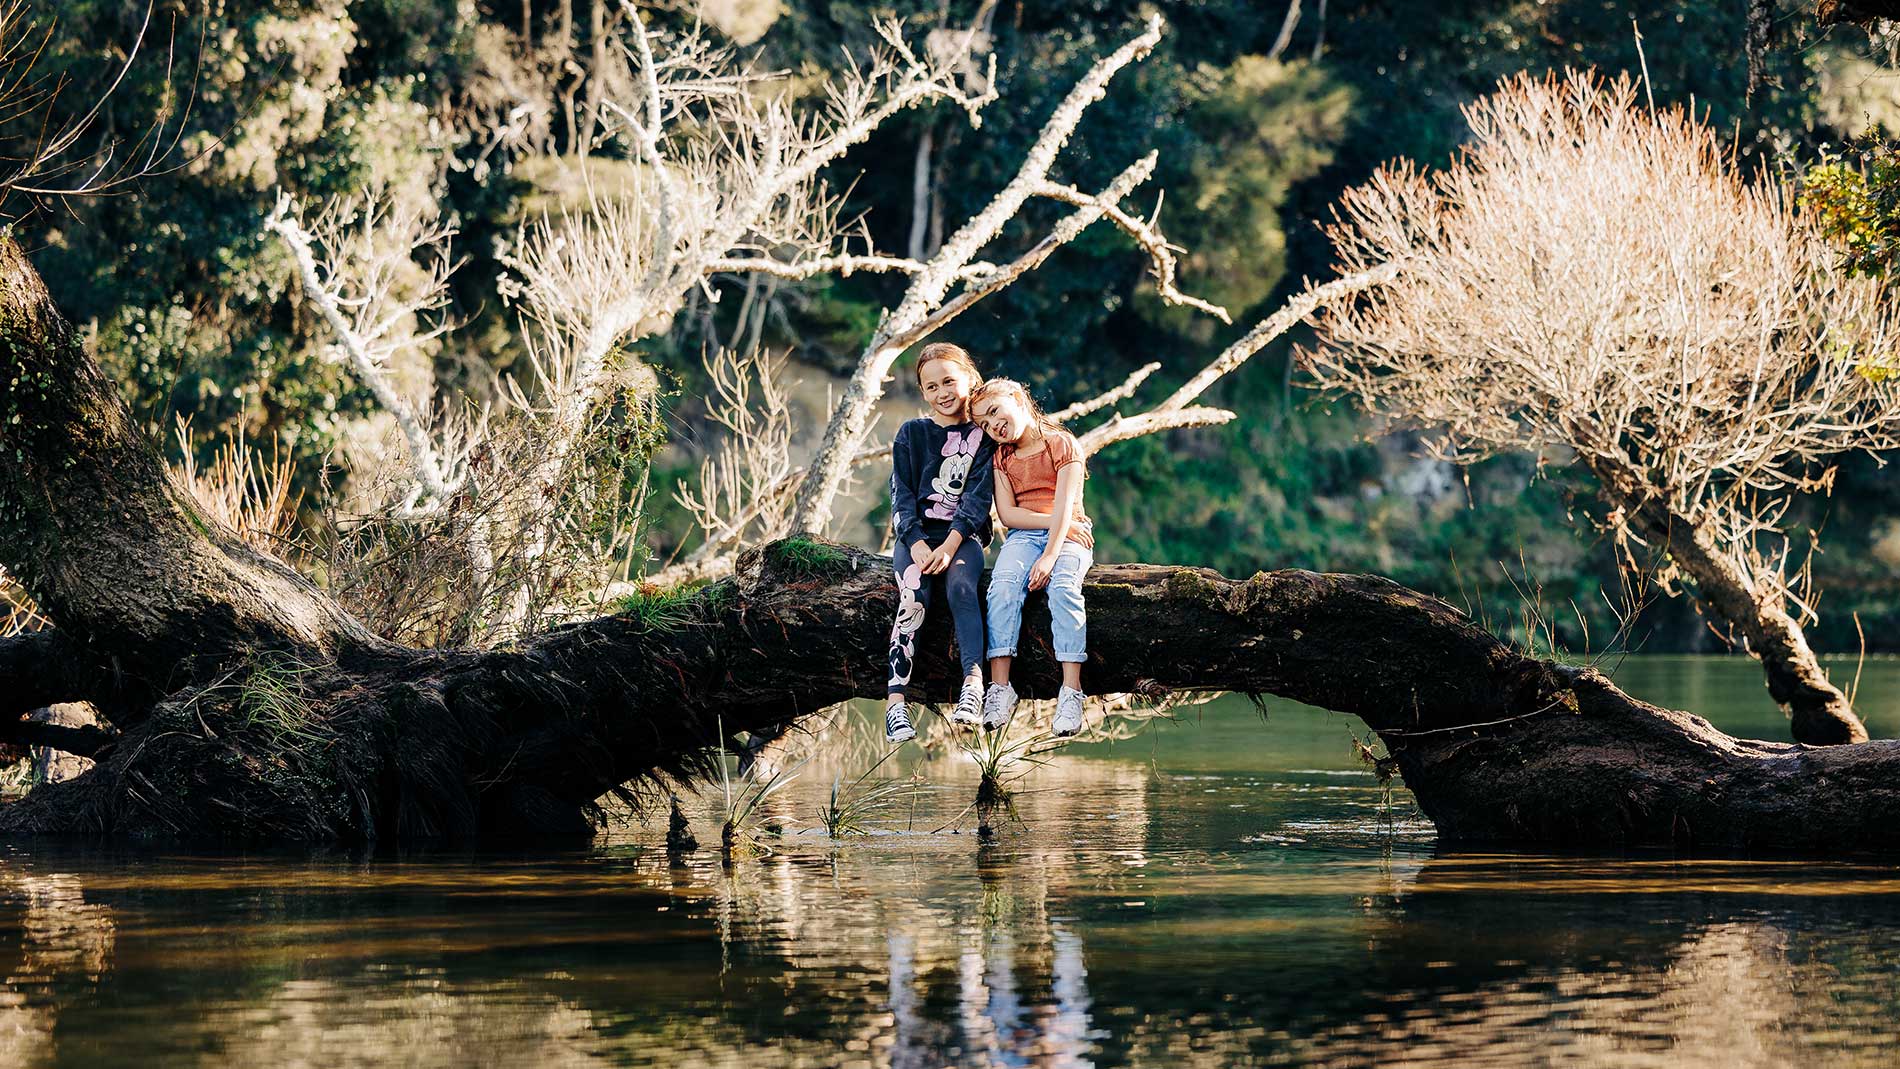  Image - children sitting on tree over stream